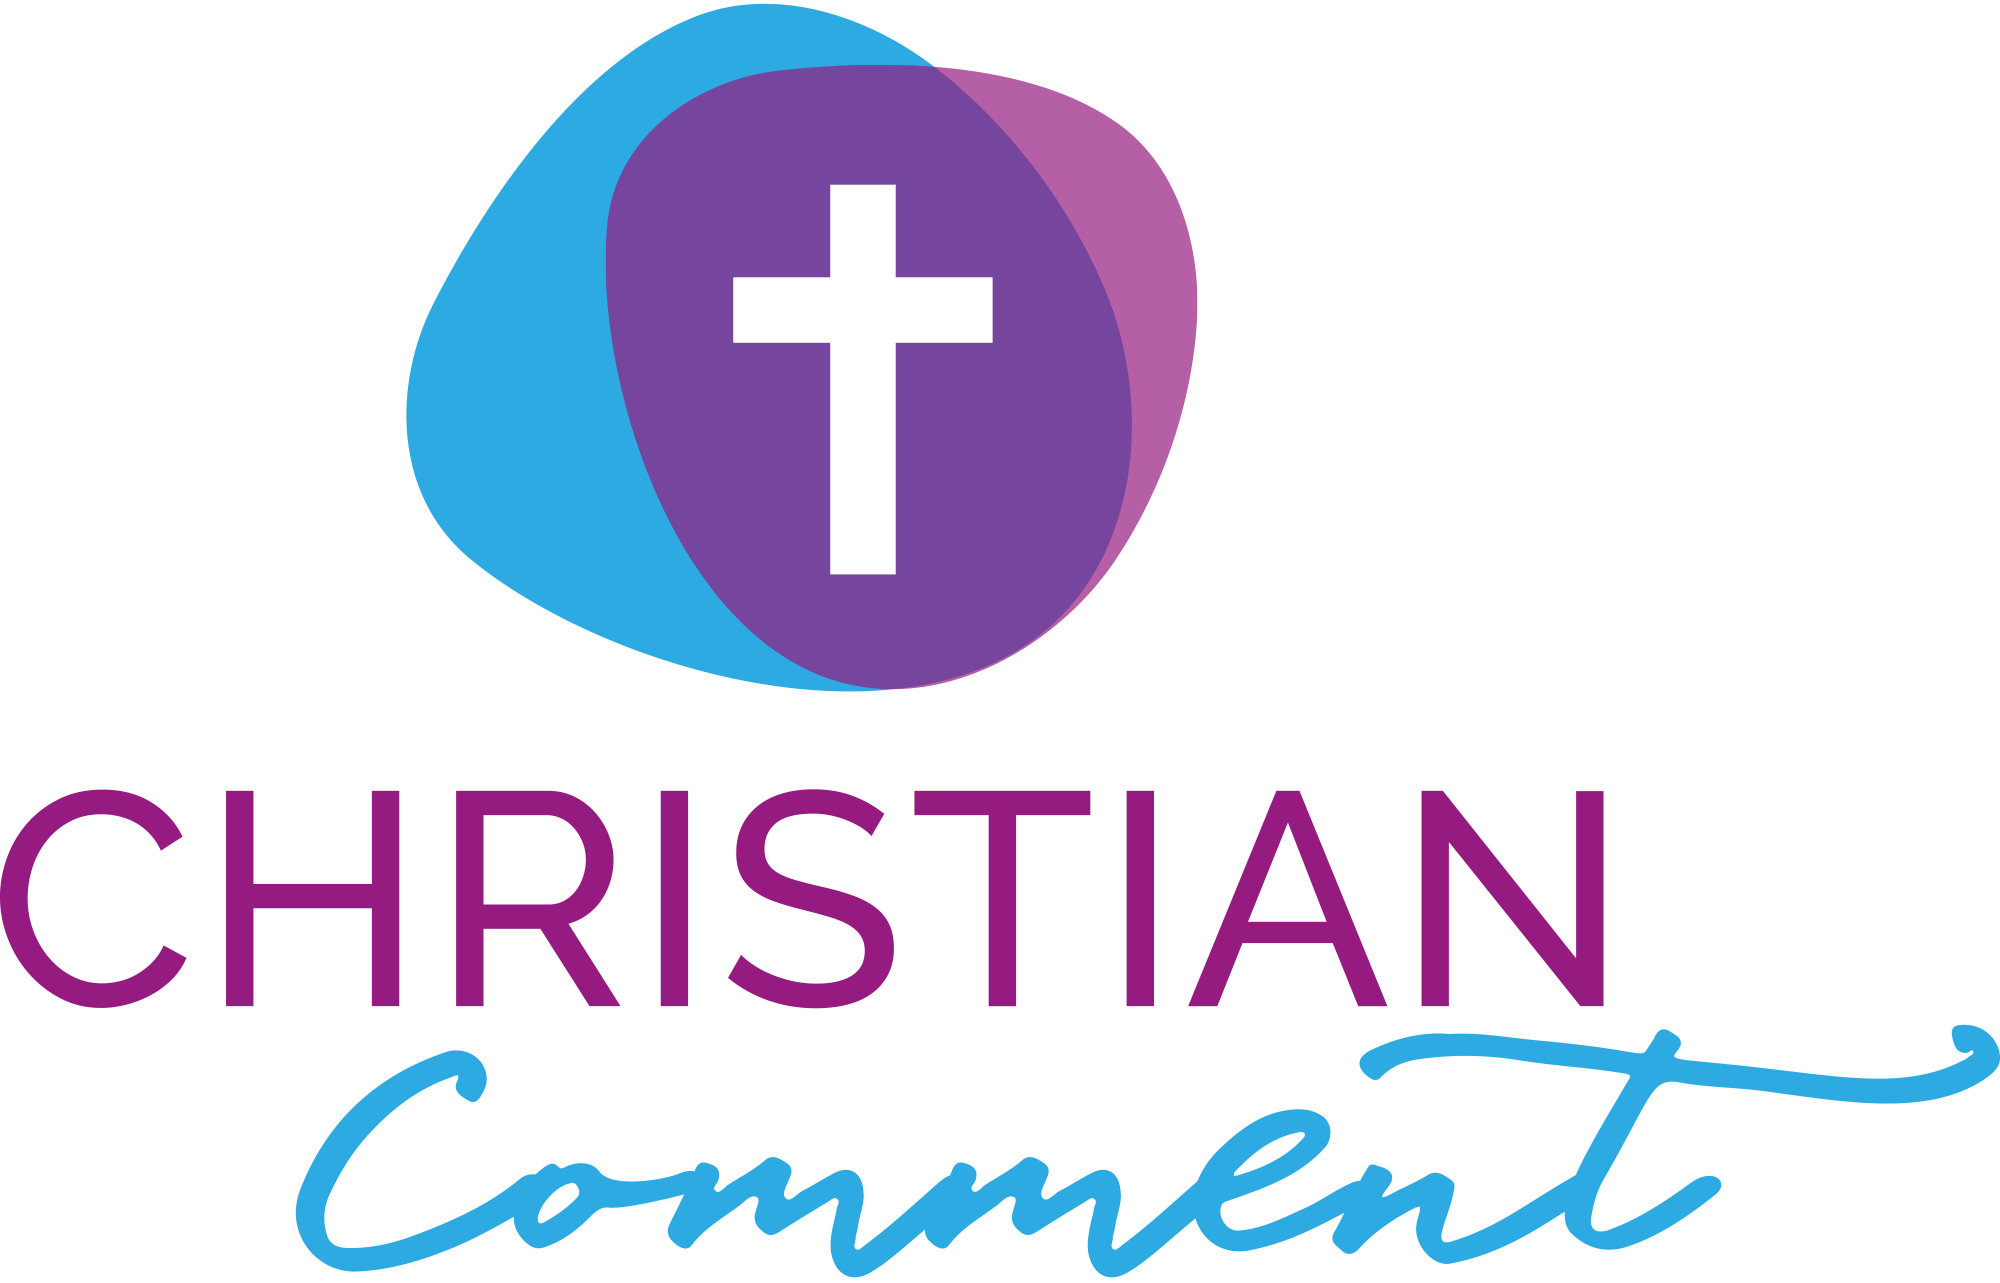 Christian PNG Image File